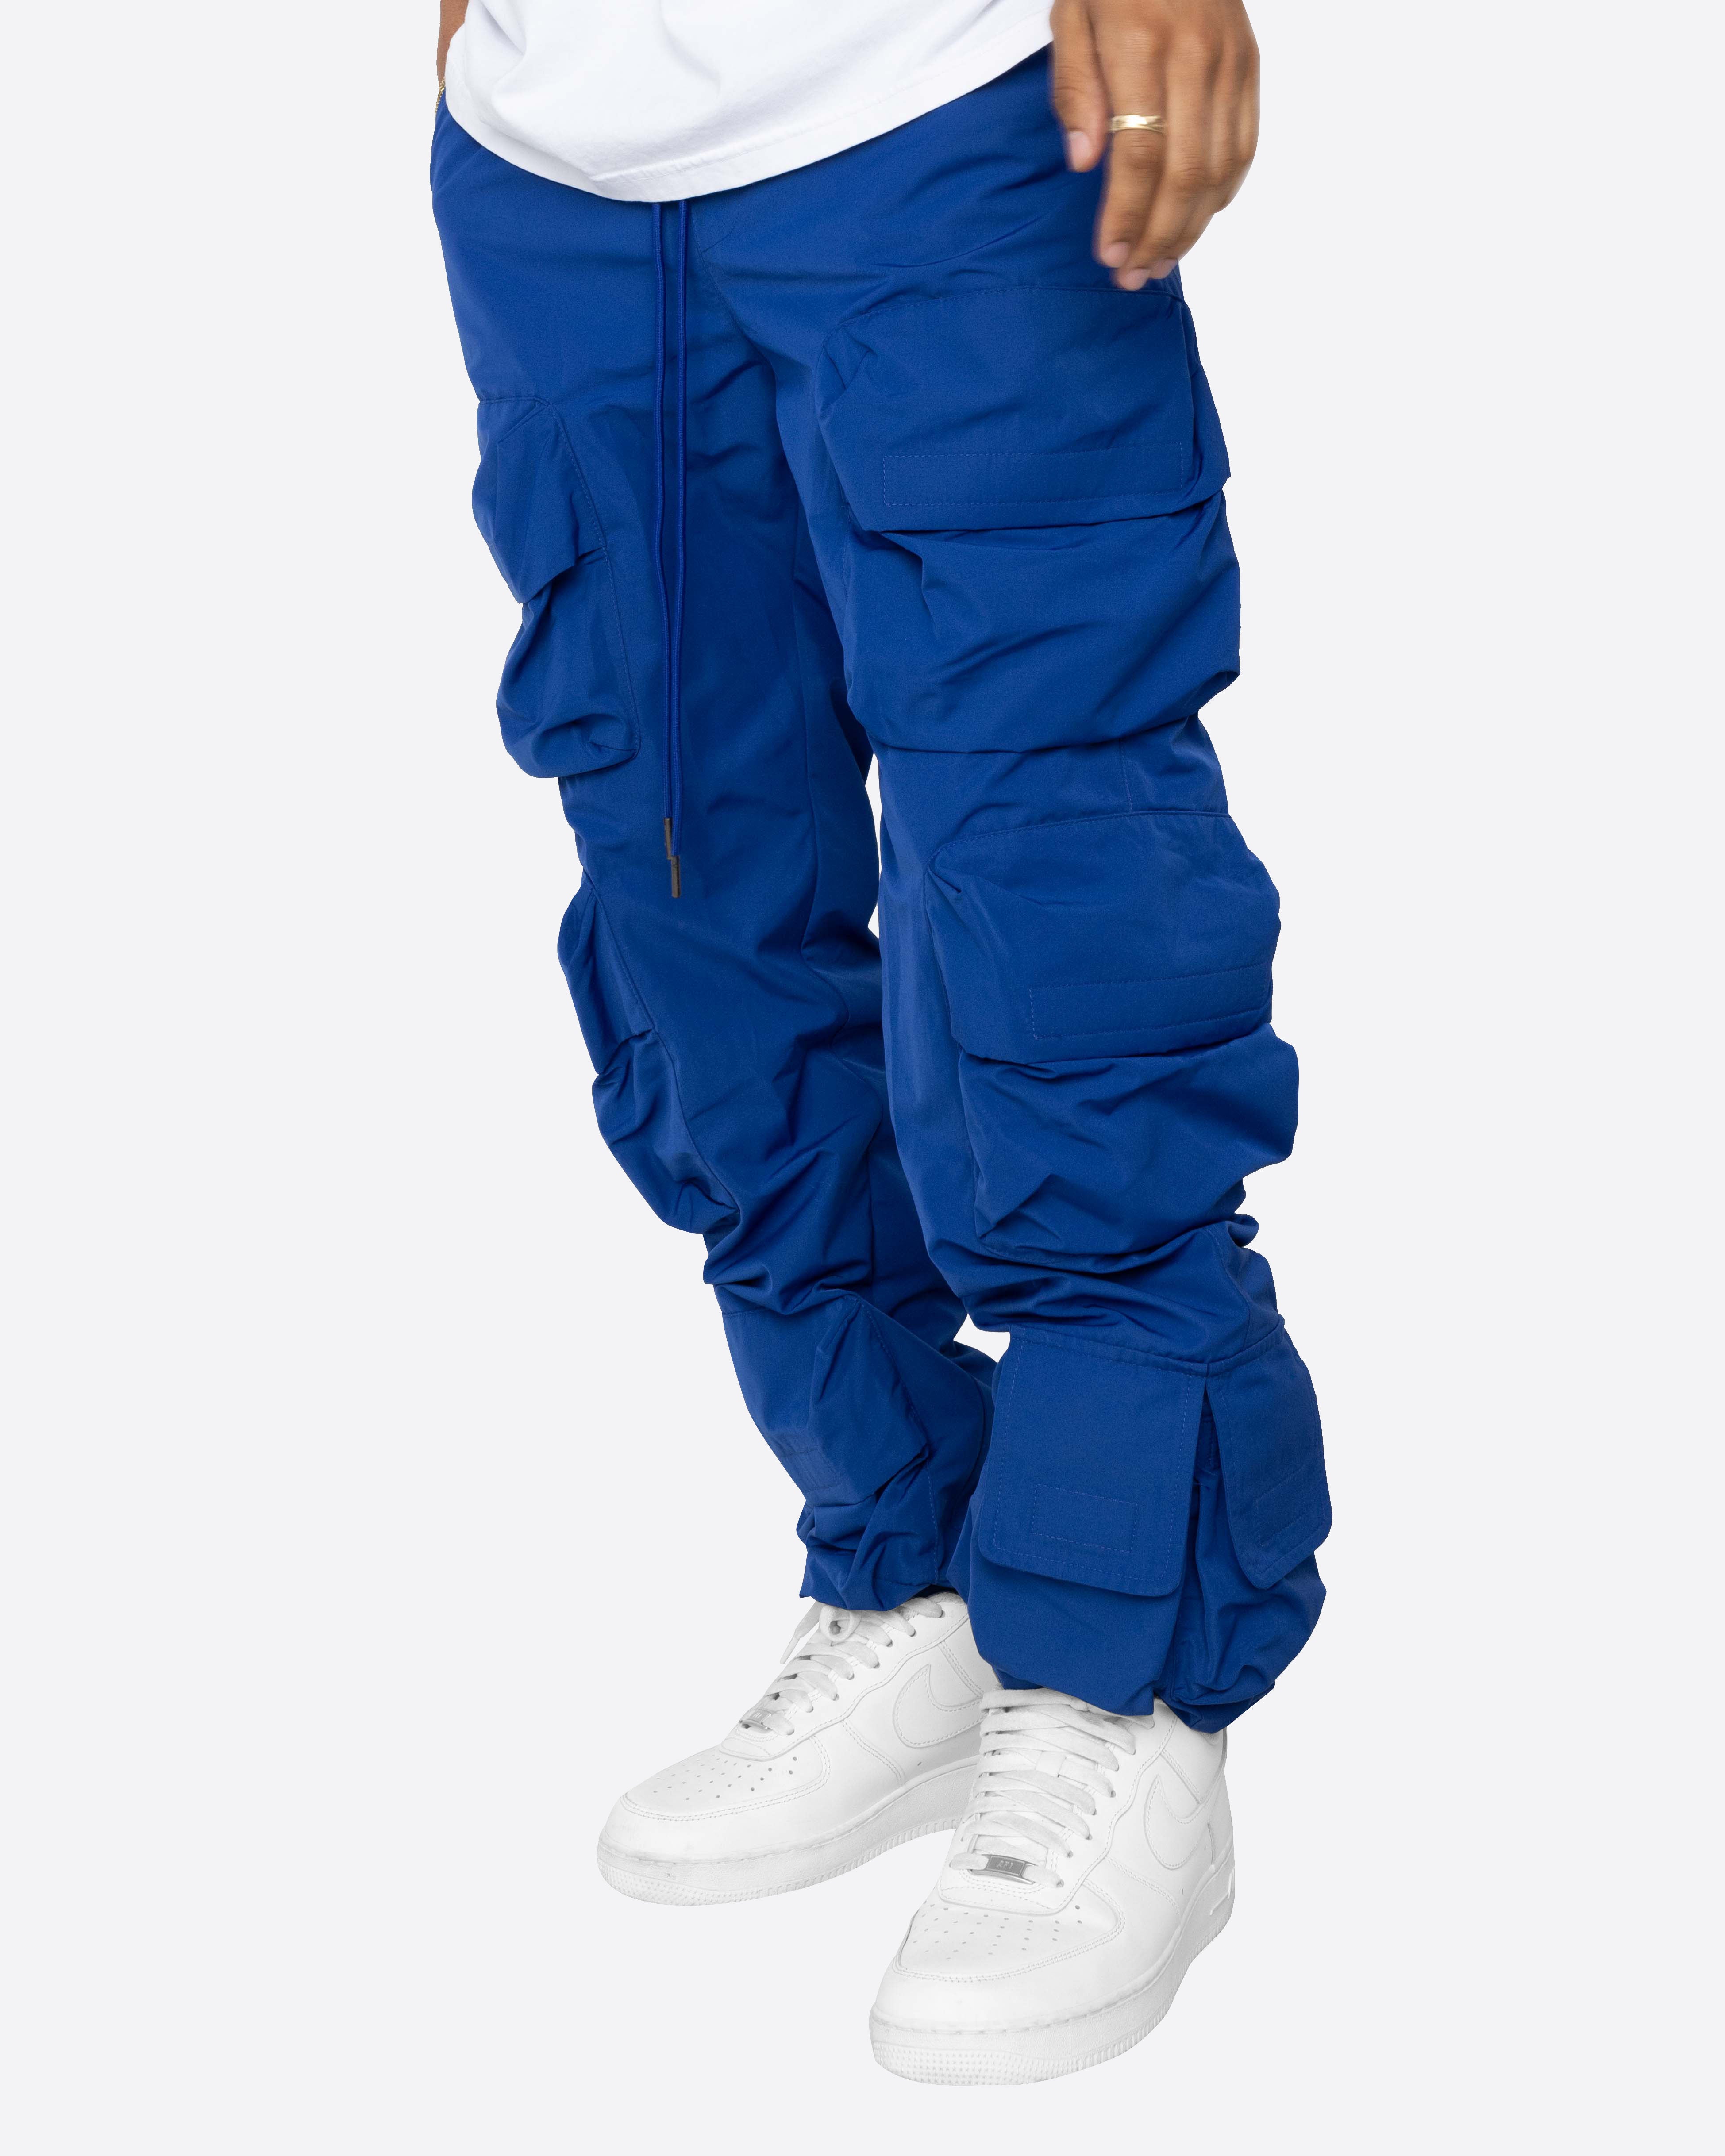 FARUTA Long pants for men Style Cotton Mens Cargo Pants Hip Hop Joggers  Sweatpants Trousers Male Streetwear Ankle-Length Harem Pants (Size : M):  Buy Online at Best Price in UAE - Amazon.ae